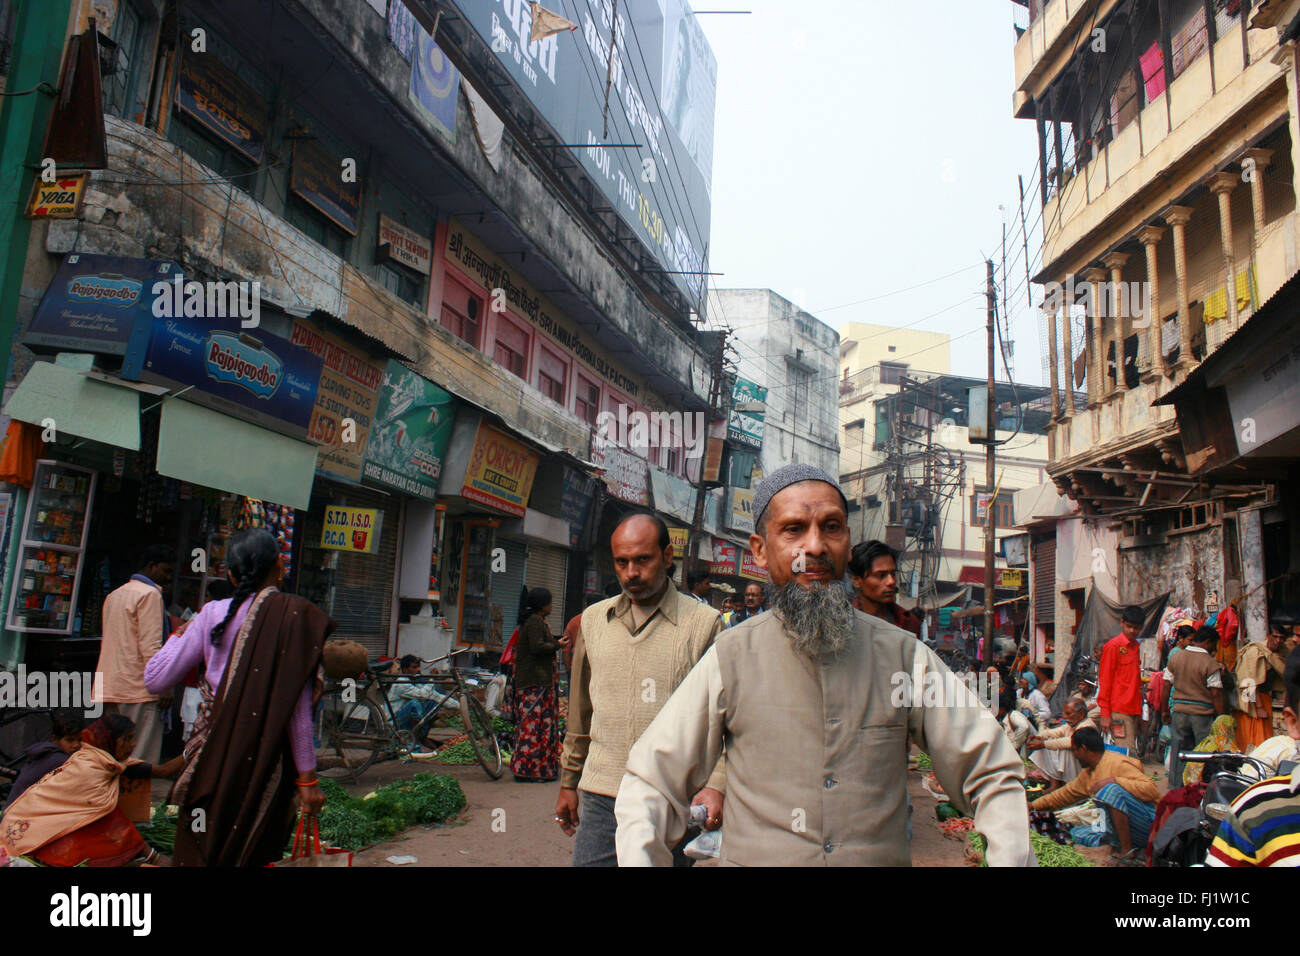 Crowd in a street of Varanasi, India Stock Photo